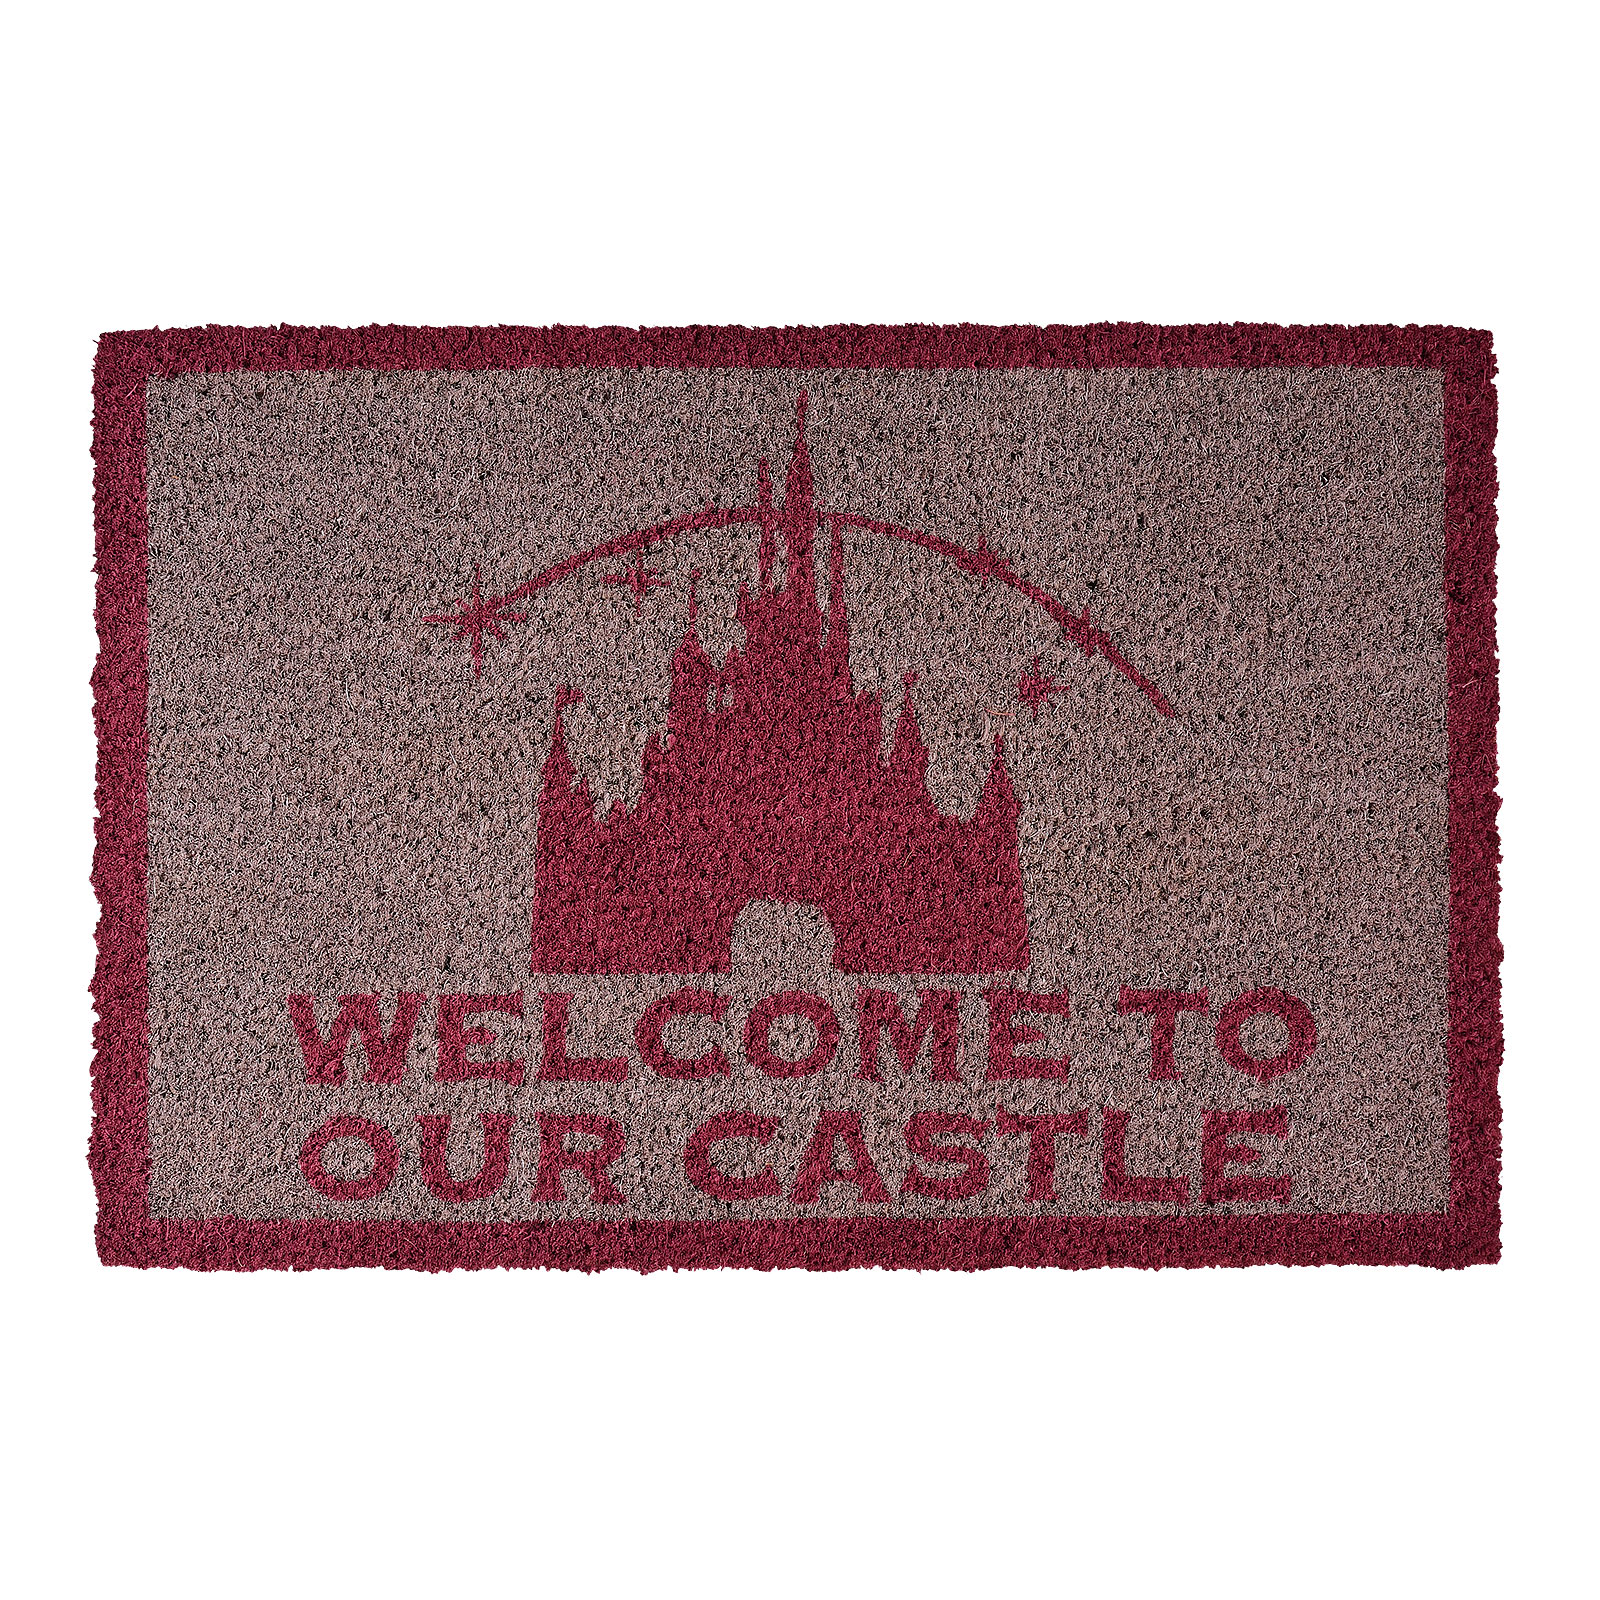 Disney - Welcome to Our Castle Doormat